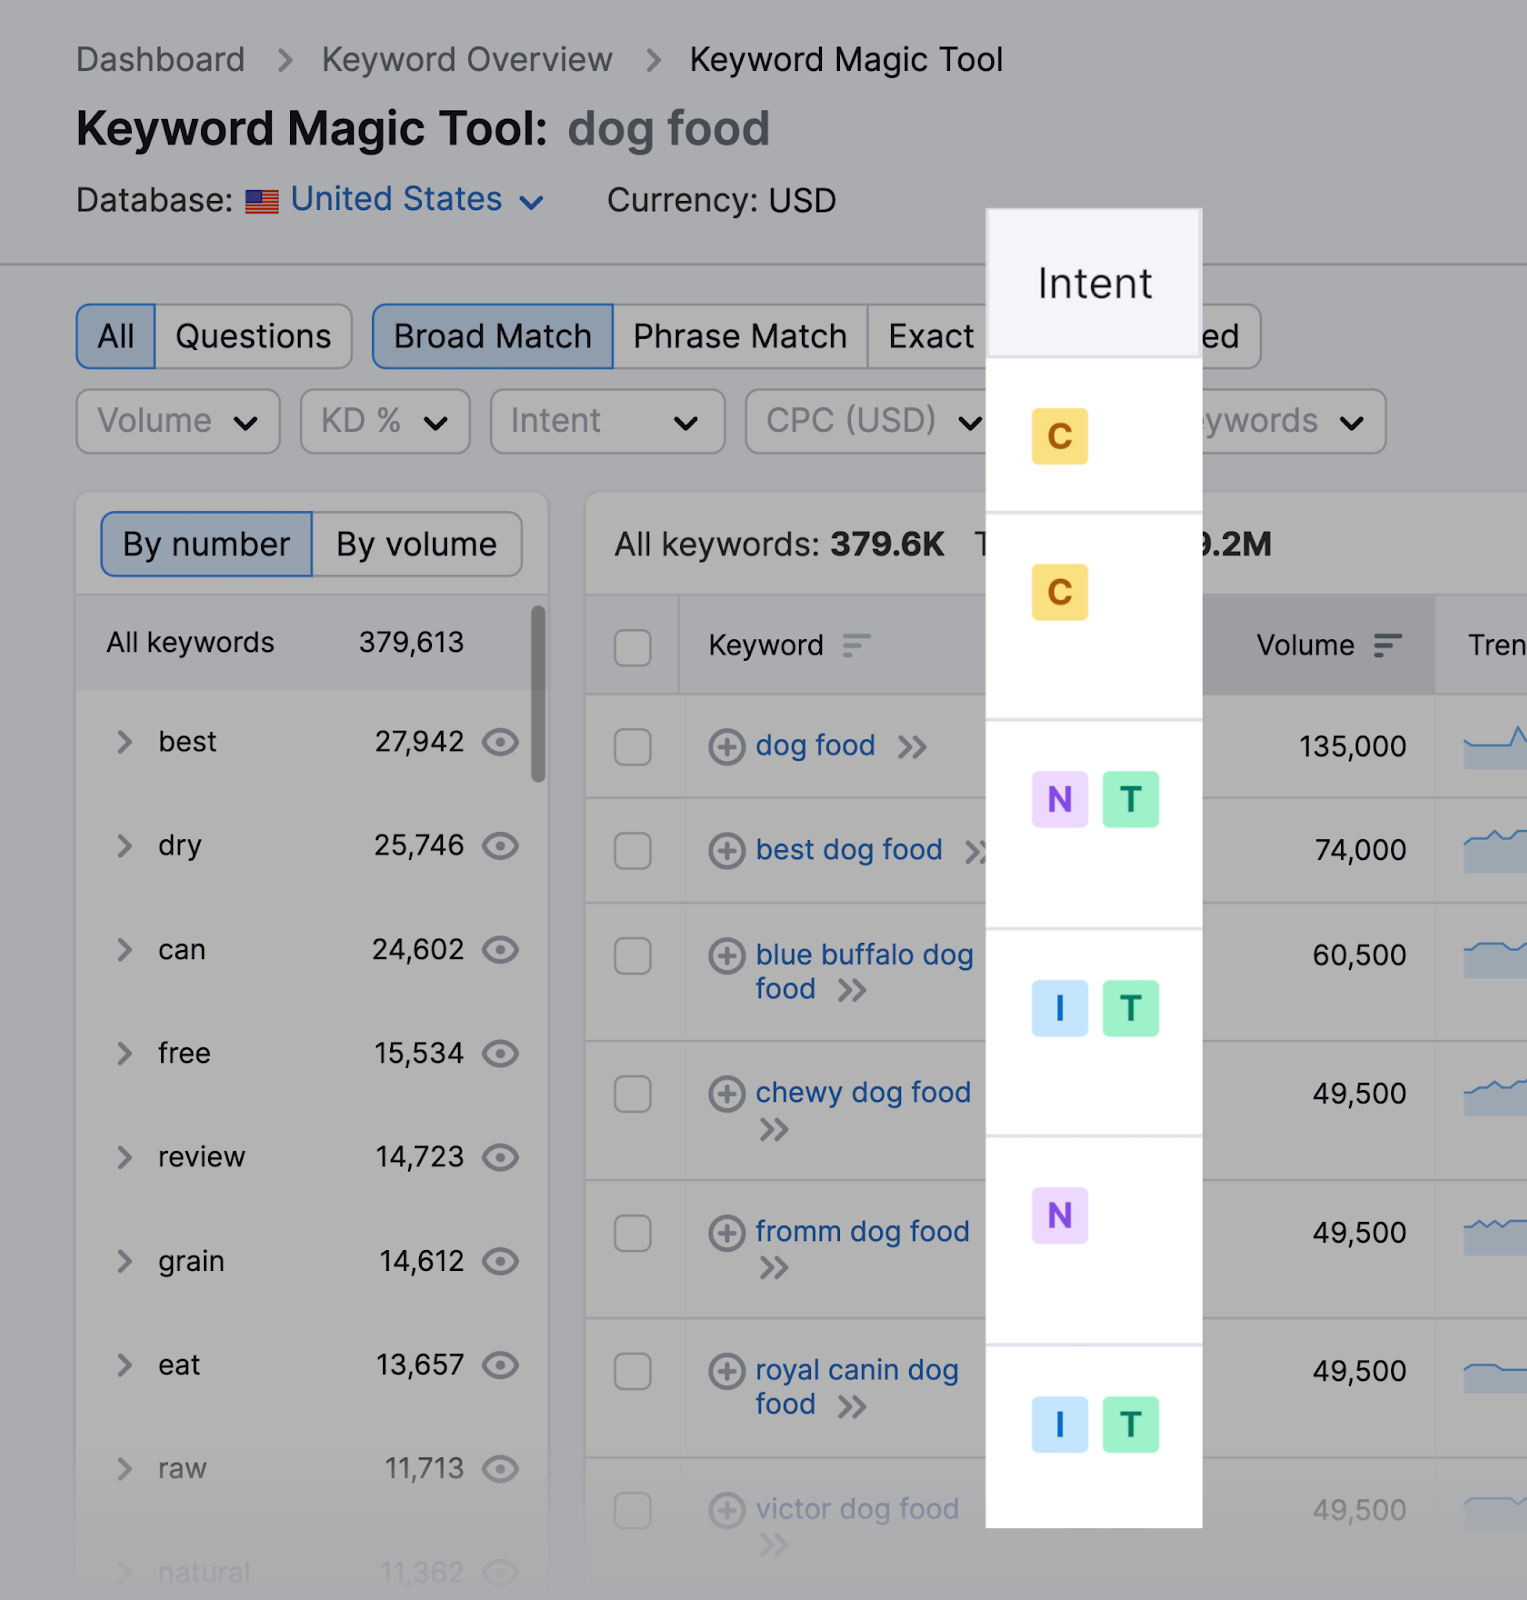 keyword magic tool intent column